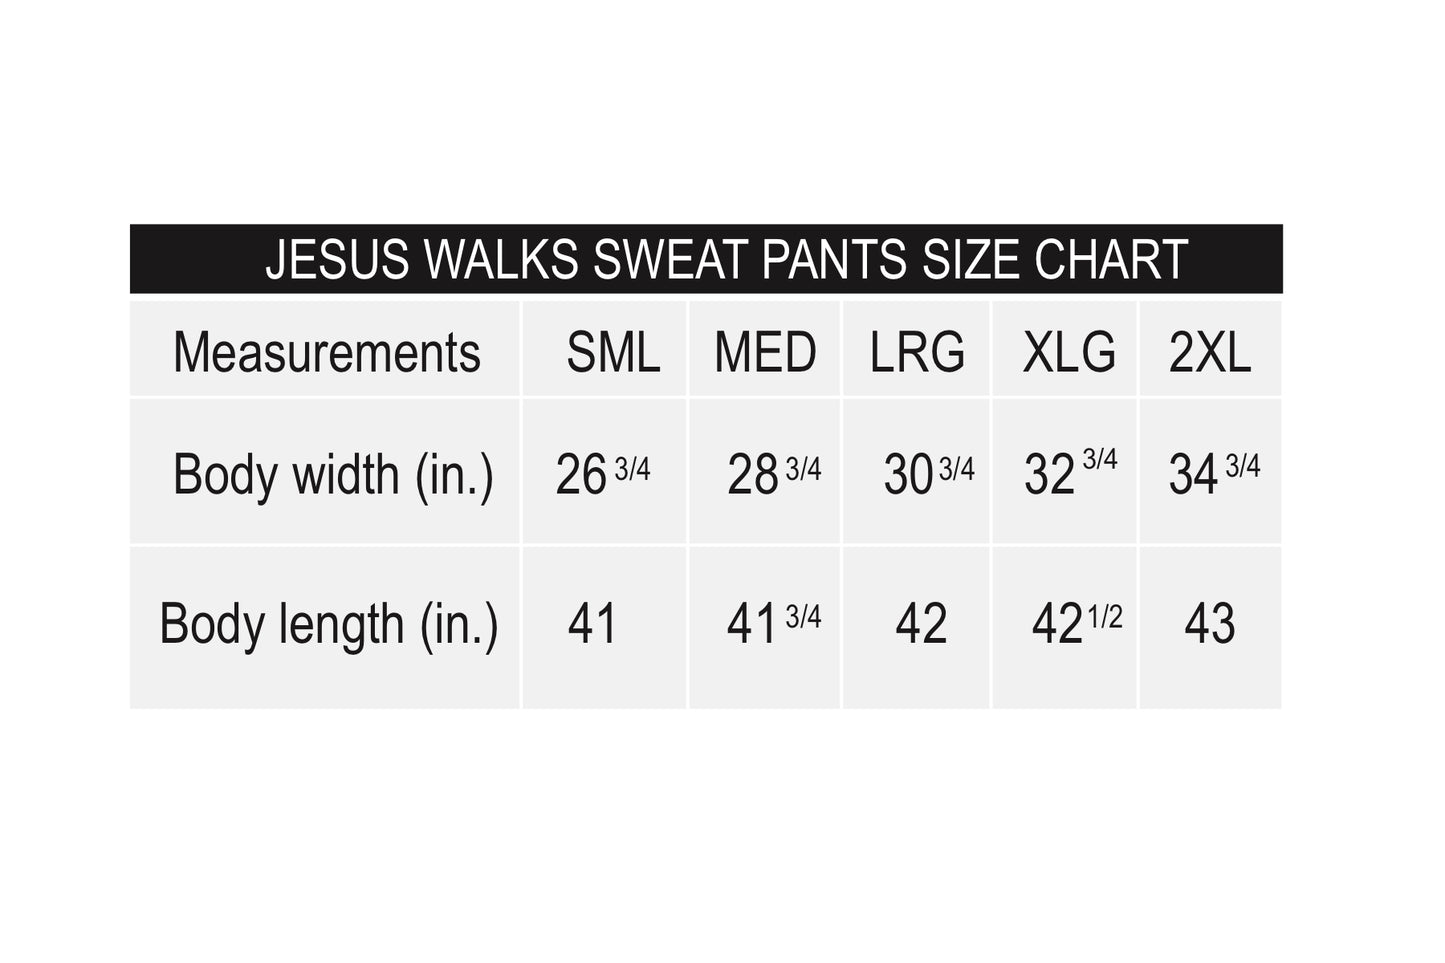 JESUS WALKS SWEATPANTS